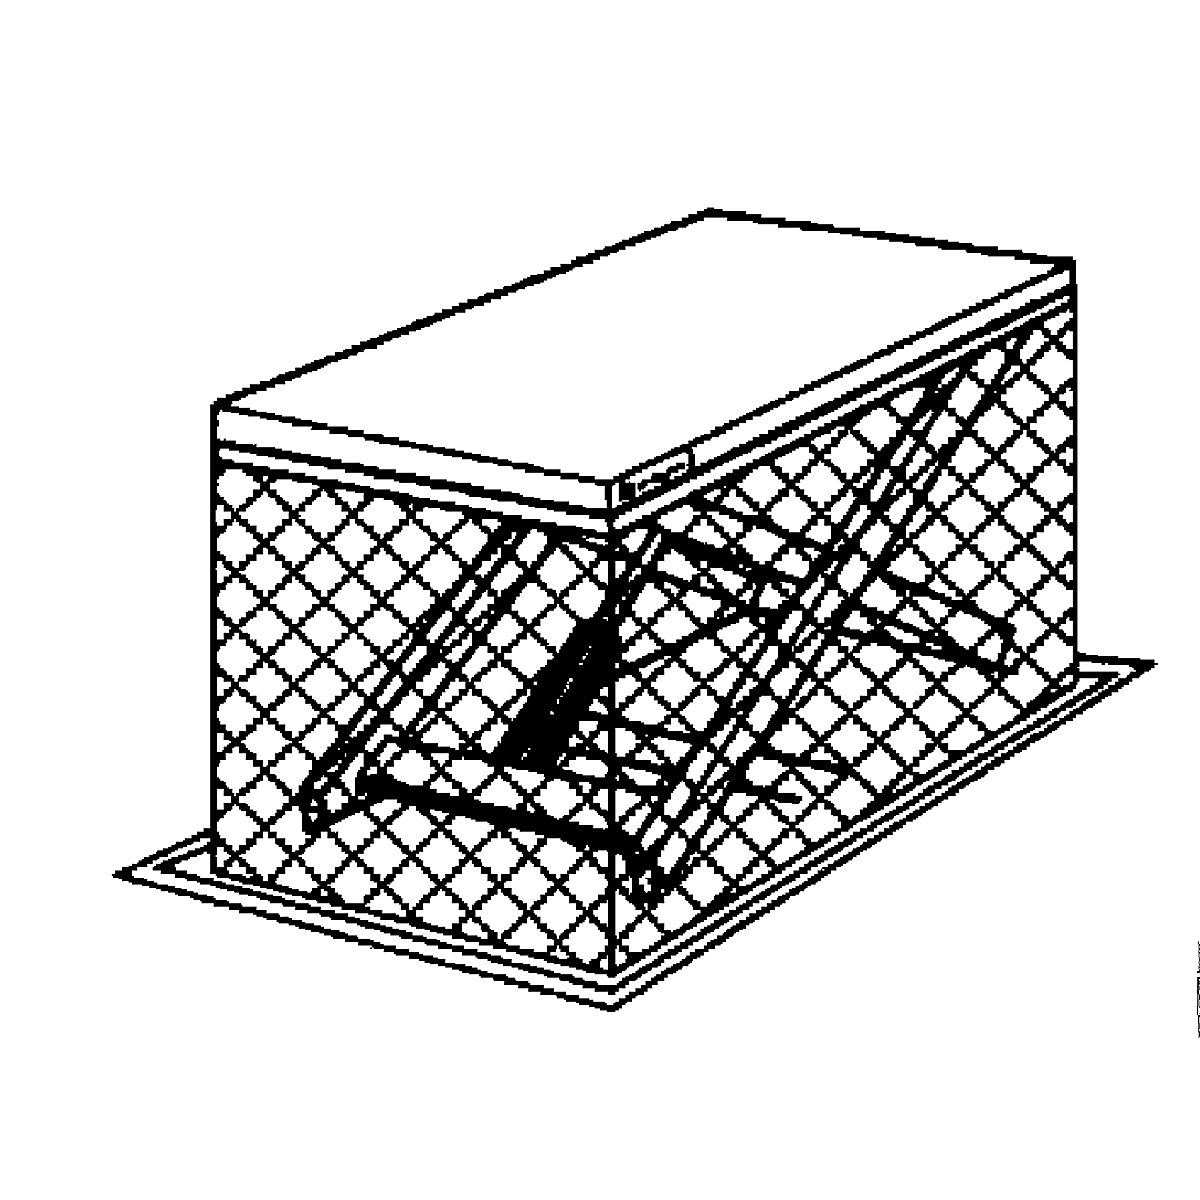 Compact lift table – Edmolift (Product illustration 11)